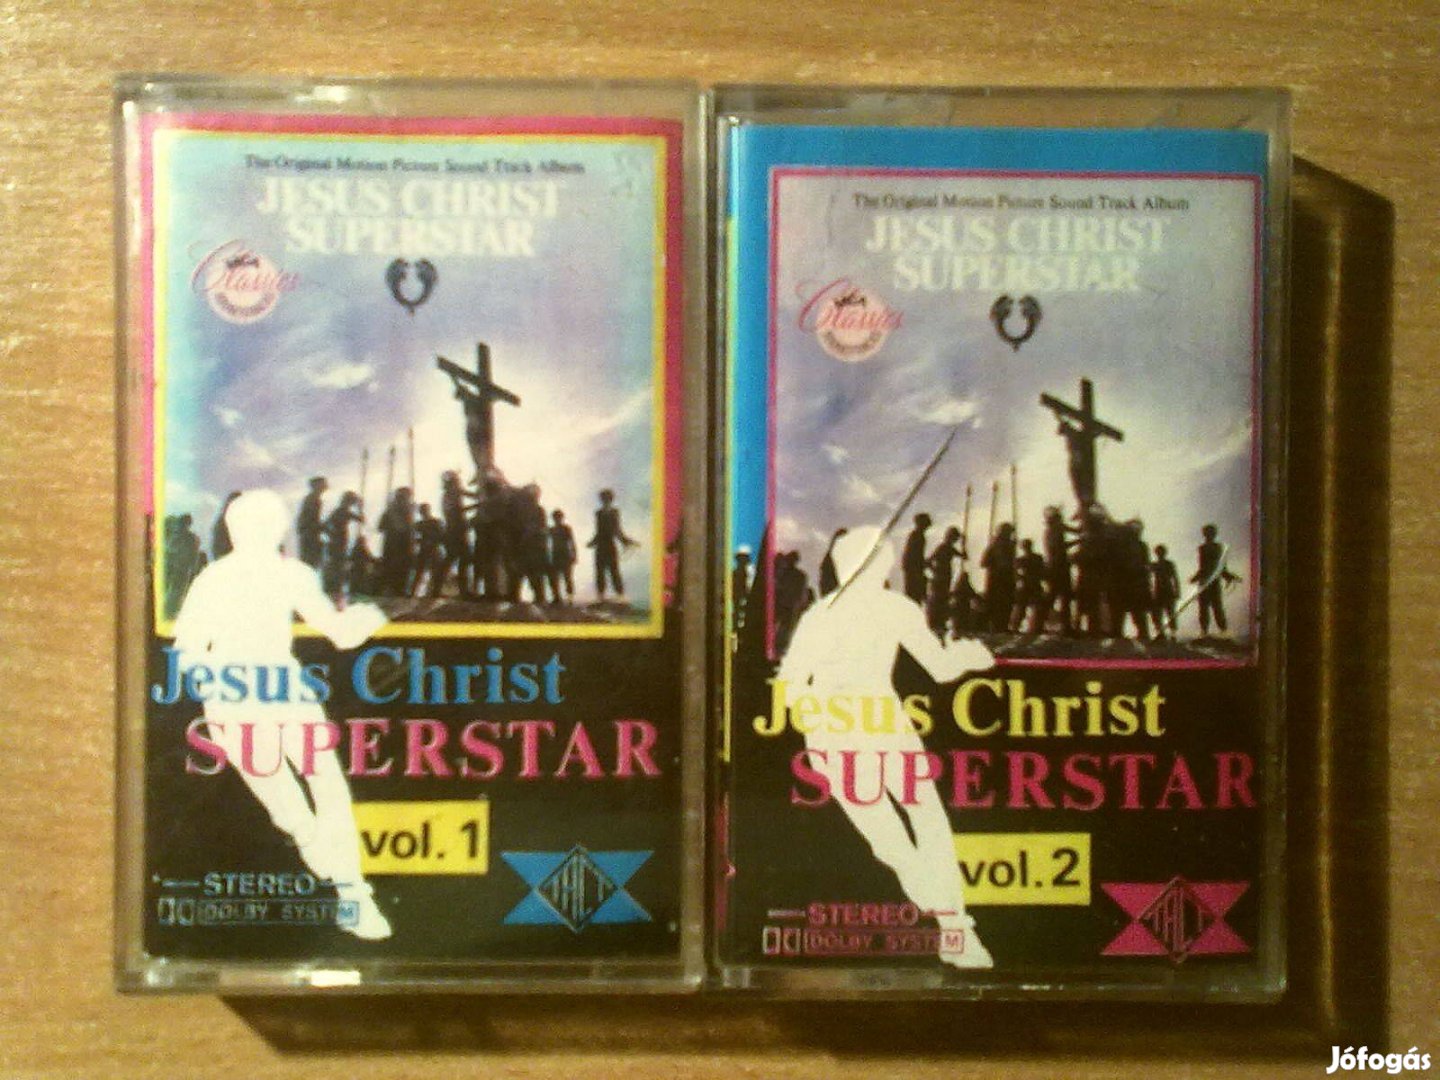 Jesus Christ Superstar (The Original Motion Picture Sound Trac